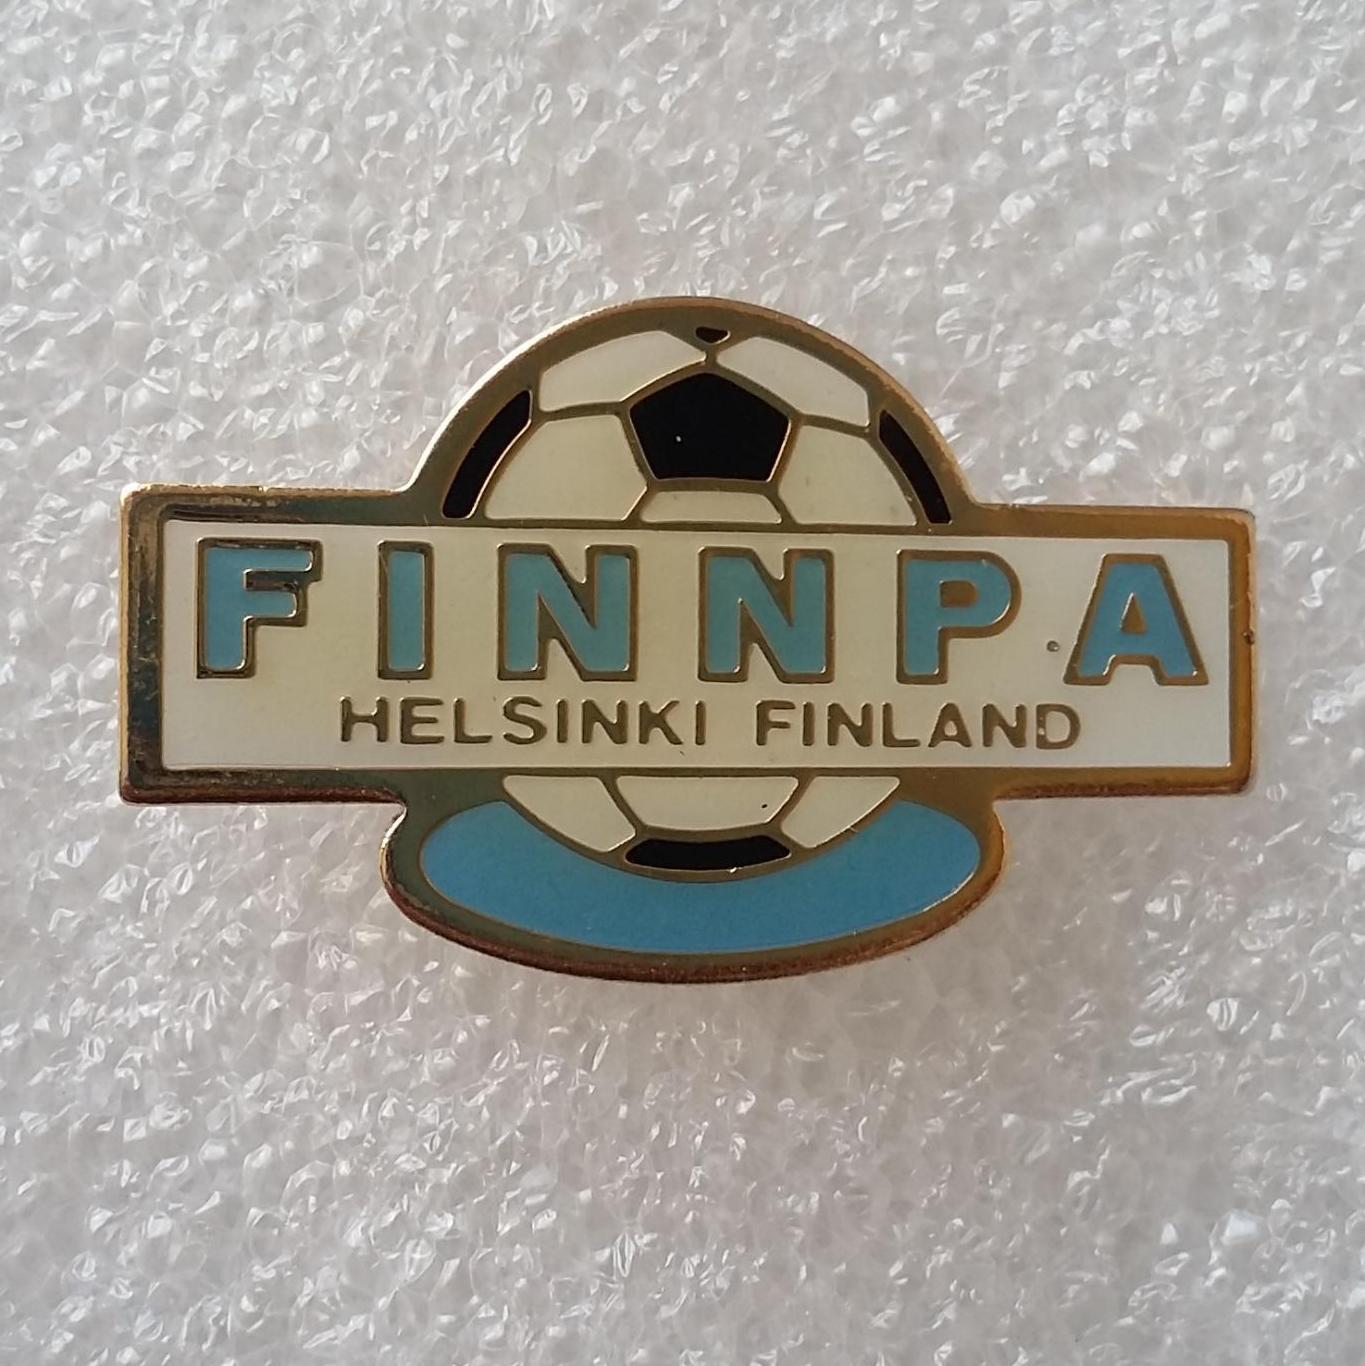 ФиннПа Финляндия, FinnPa